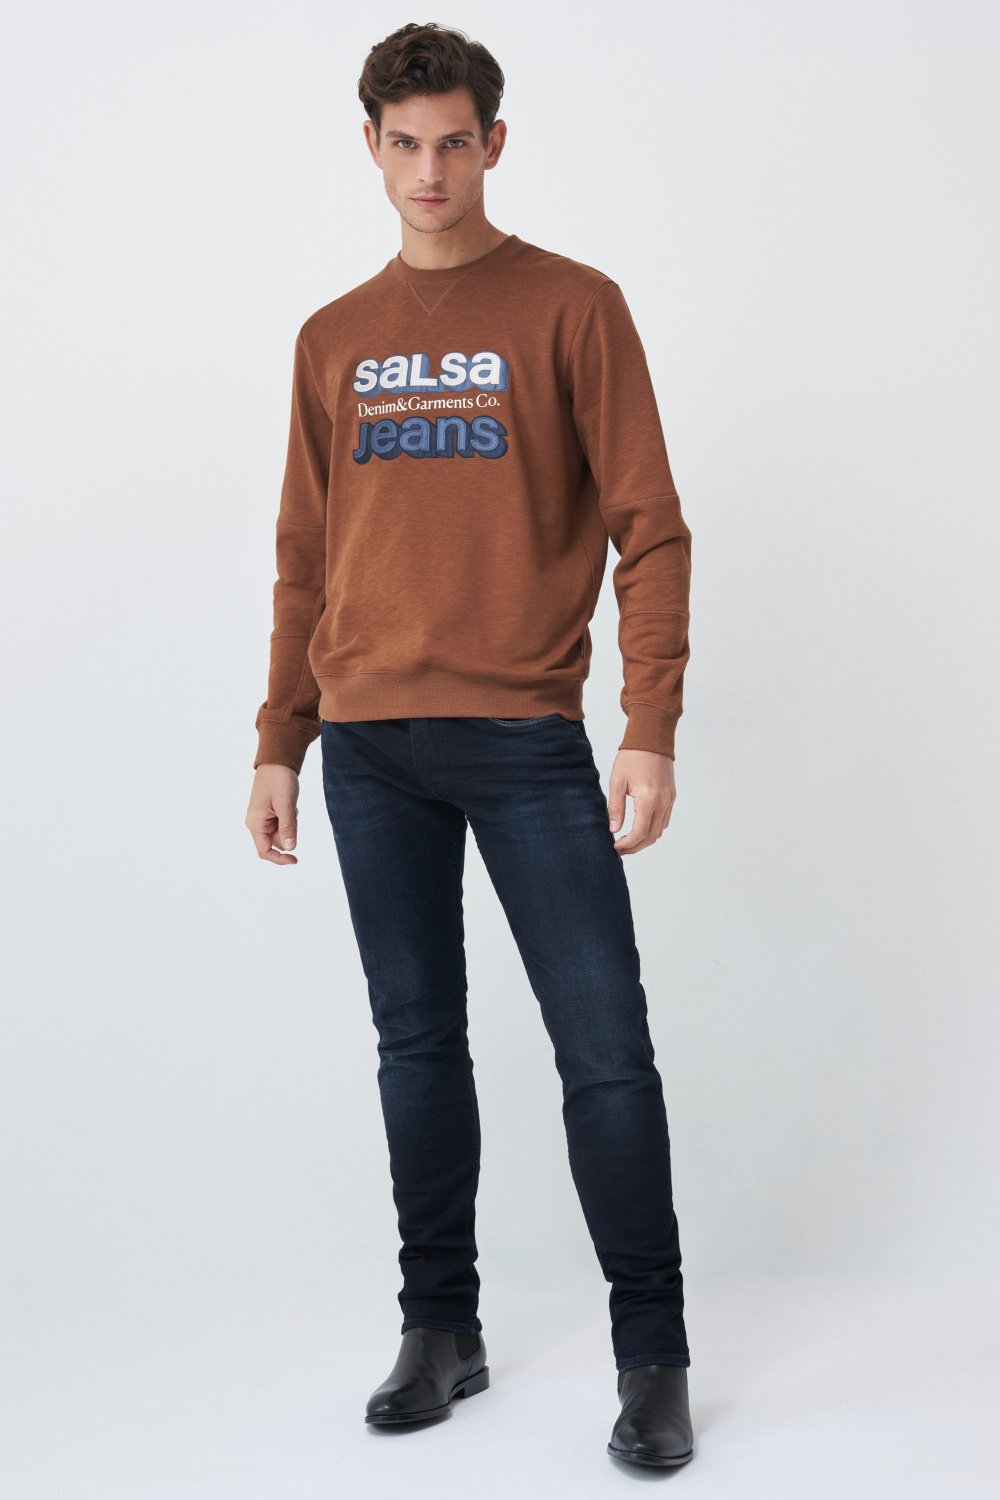 Slim branding sweater - Salsa